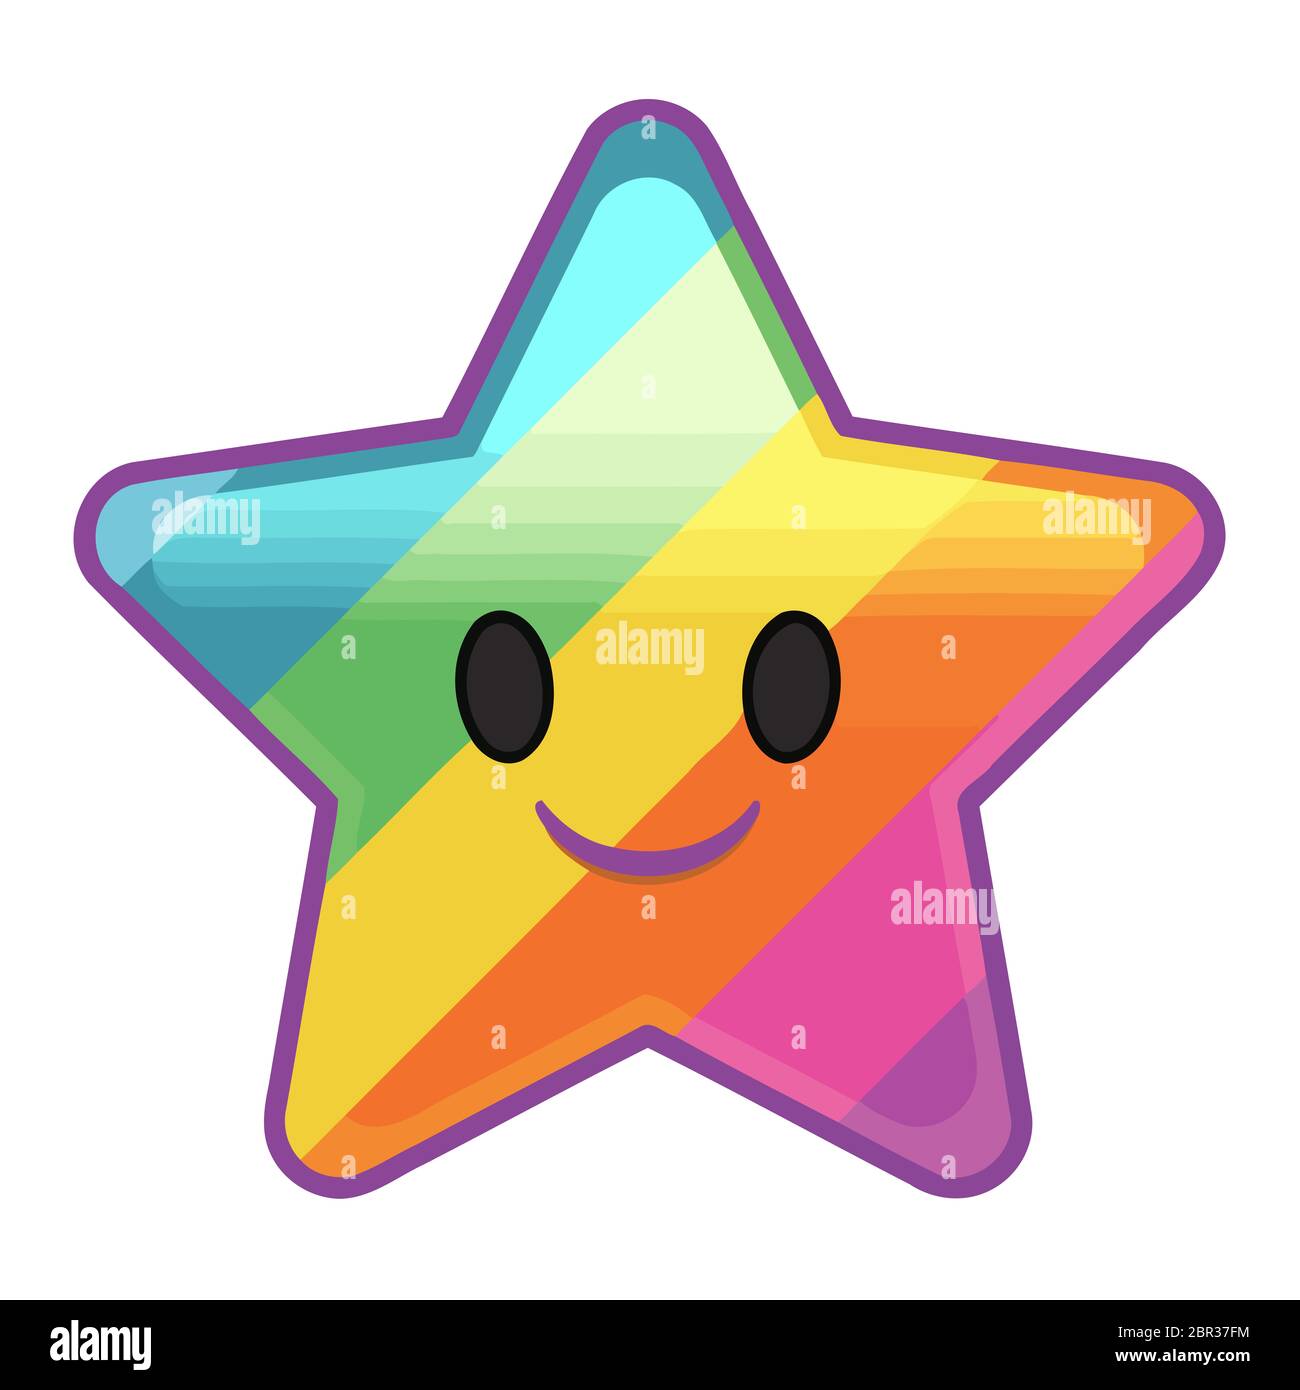 rainbow colors star shape face happy illustration Stock Photo